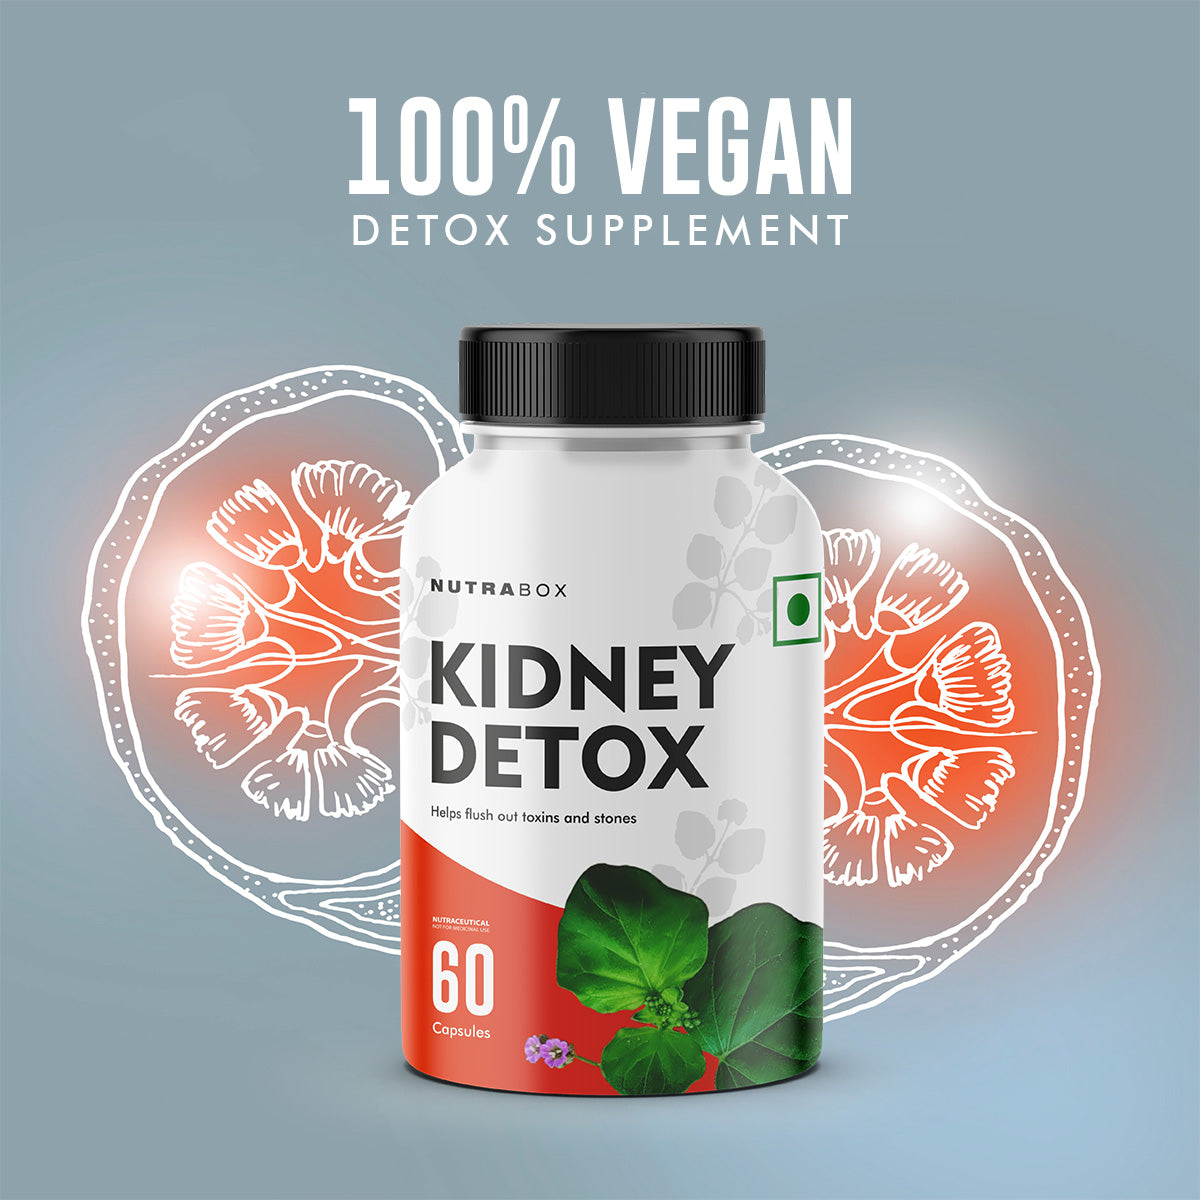 Kidney Detox Capsules are 100% Vegan